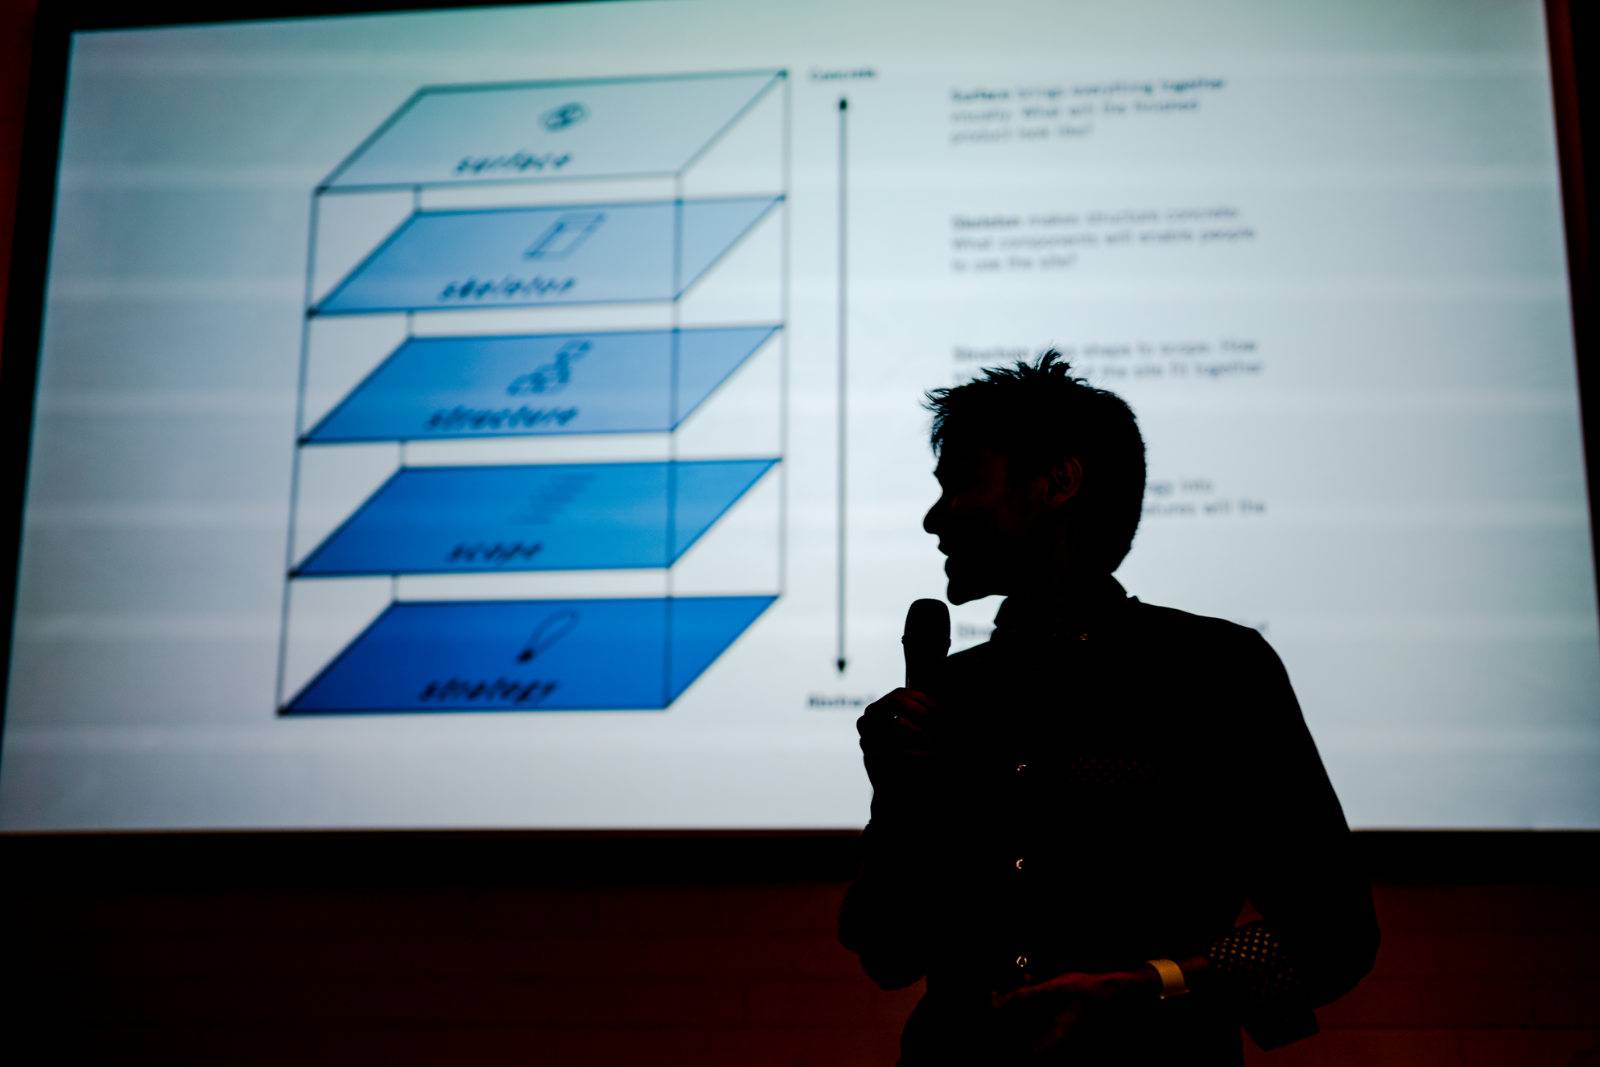 Speaking in front of the Elements of Design slide by Jesse James Garrett